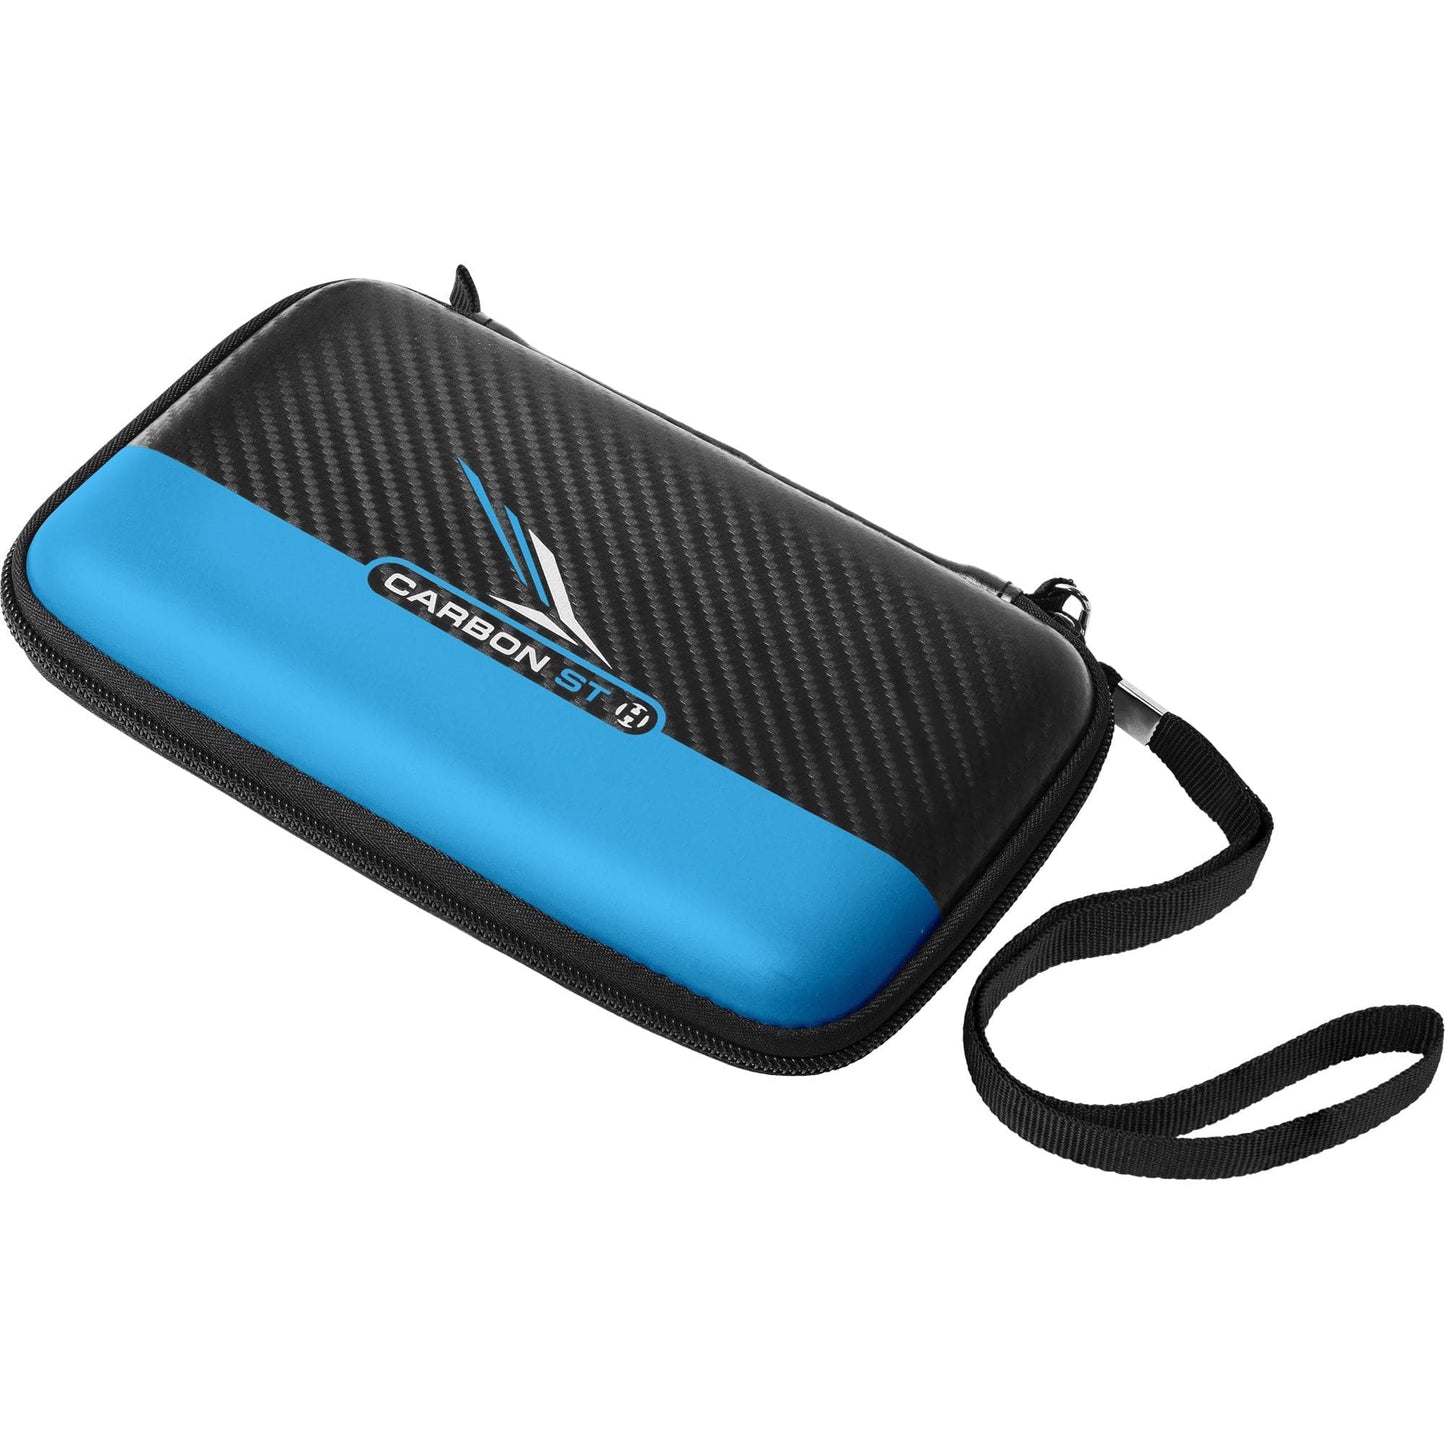 Harrows Carbon ST Pro 6 Dart Case - Strong EVA Wallet Blue